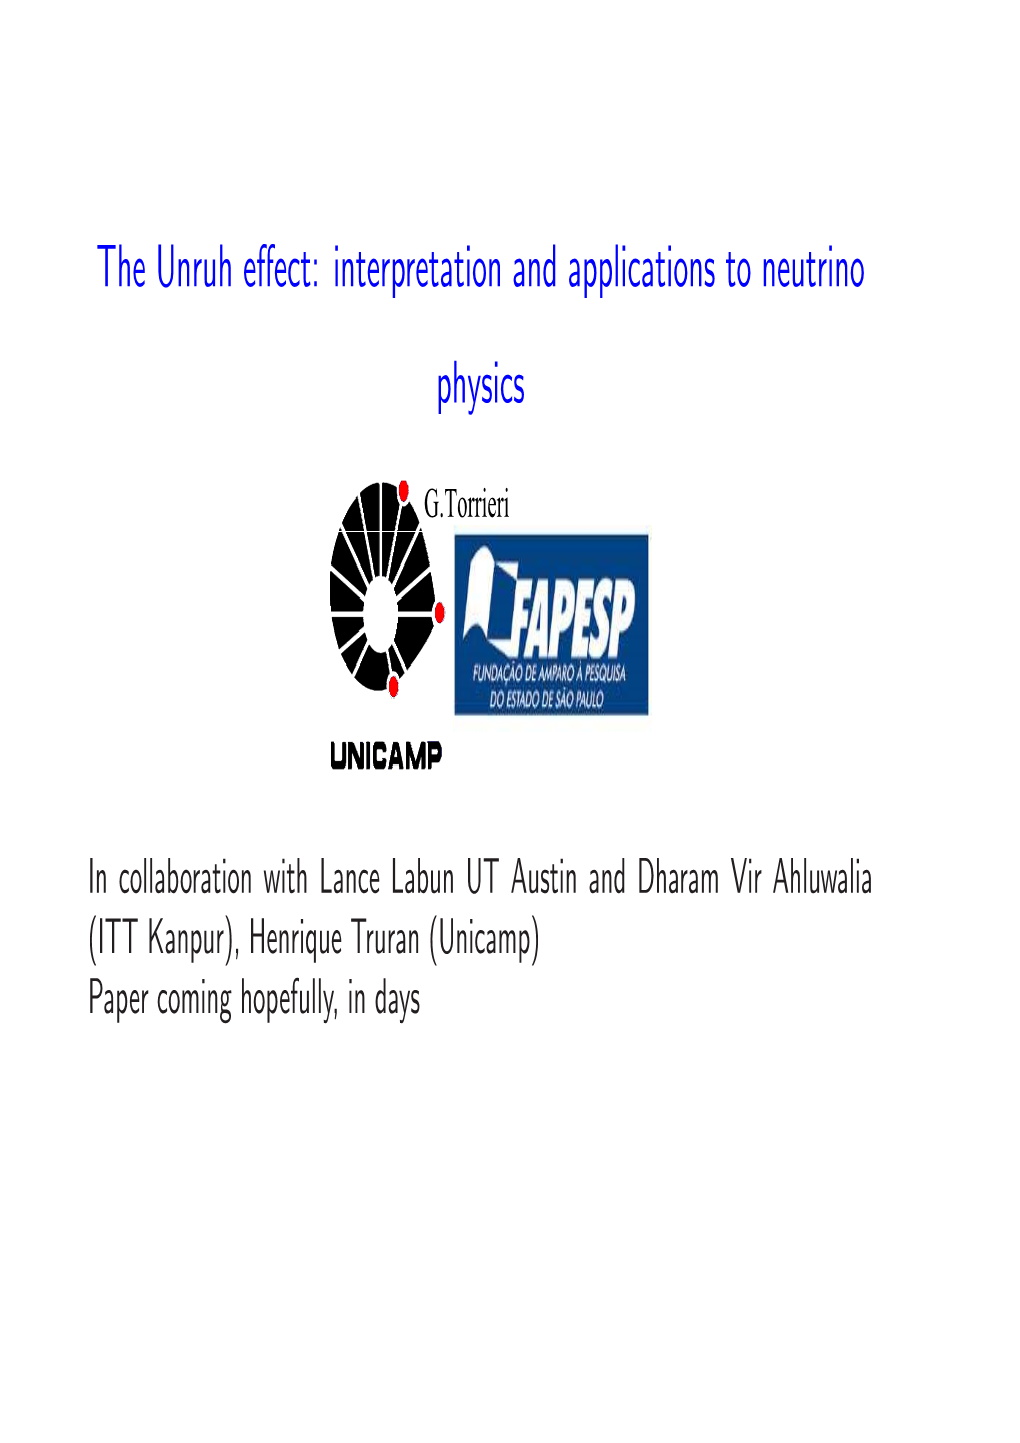 The Unruh Effect: Interpretation and Applications to Neutrino Physics